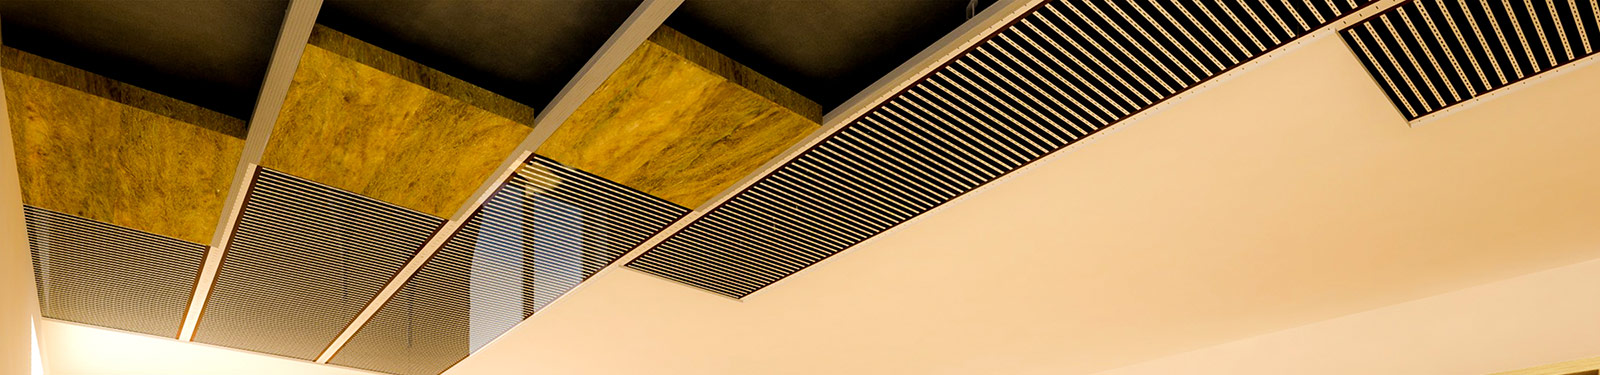 Radiant Ceiling Heating Panels